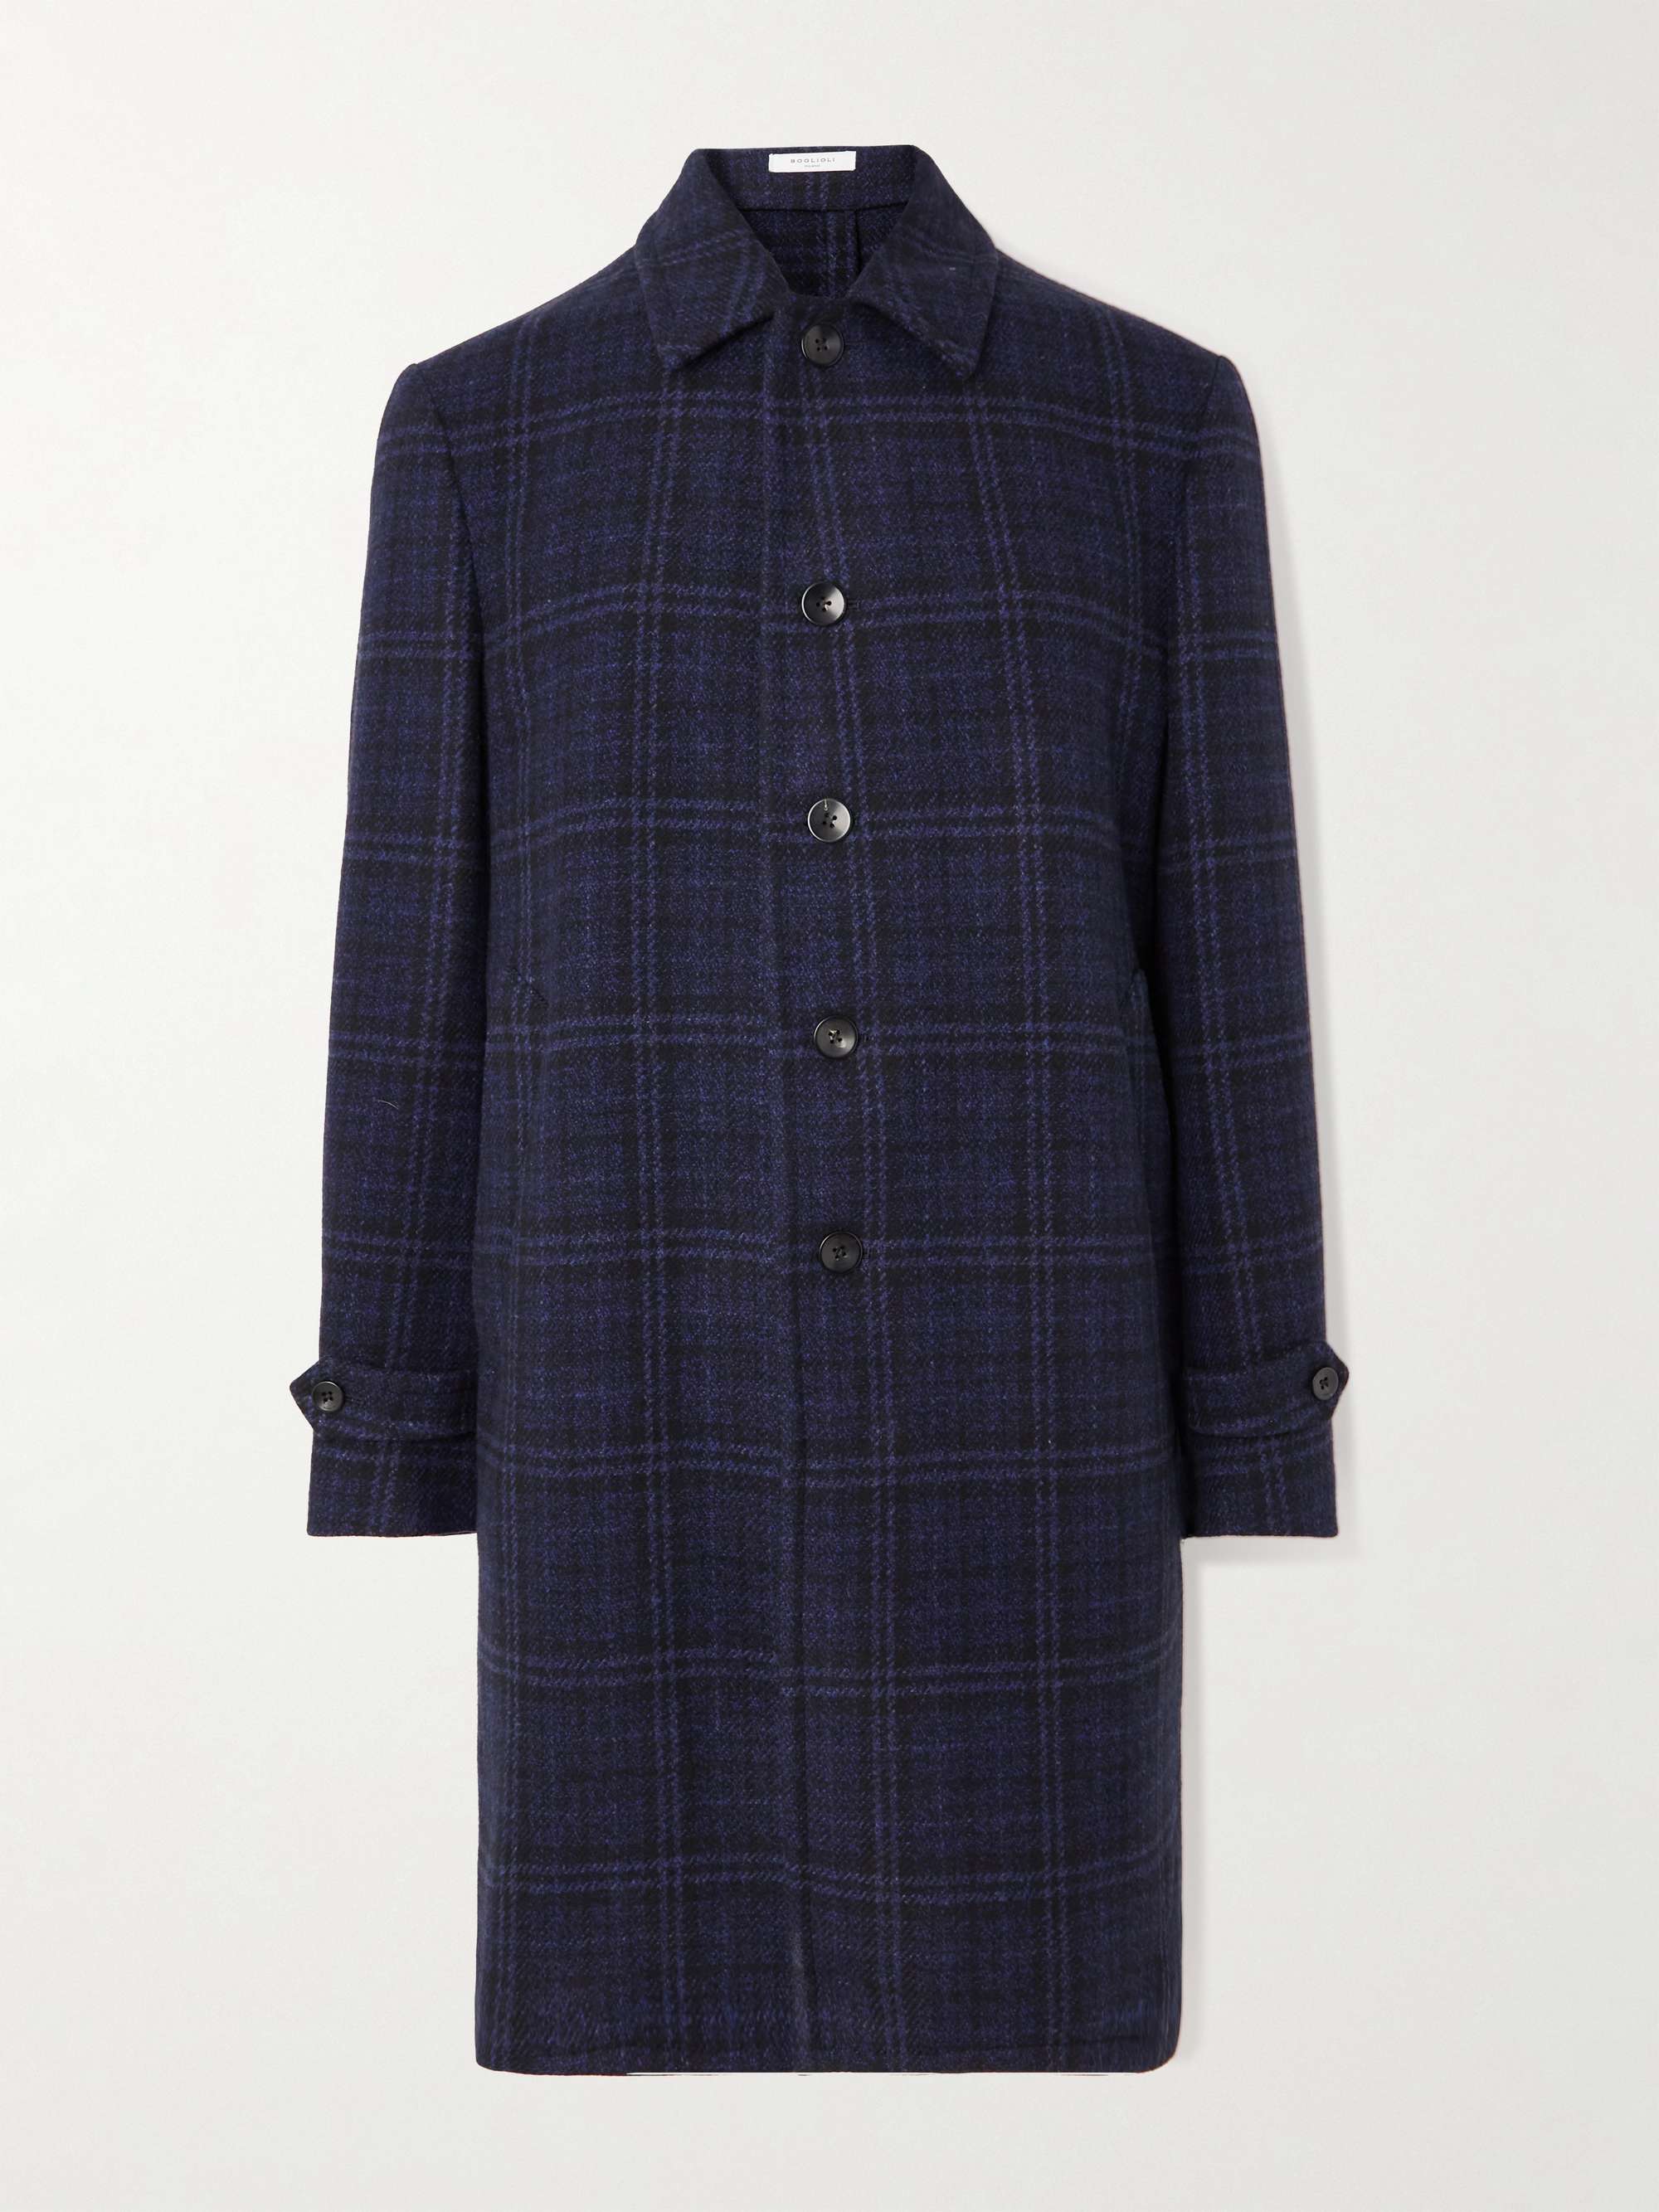 BOGLIOLI Checked Virgin Wool and Cashmere-Blend Tweed Coat